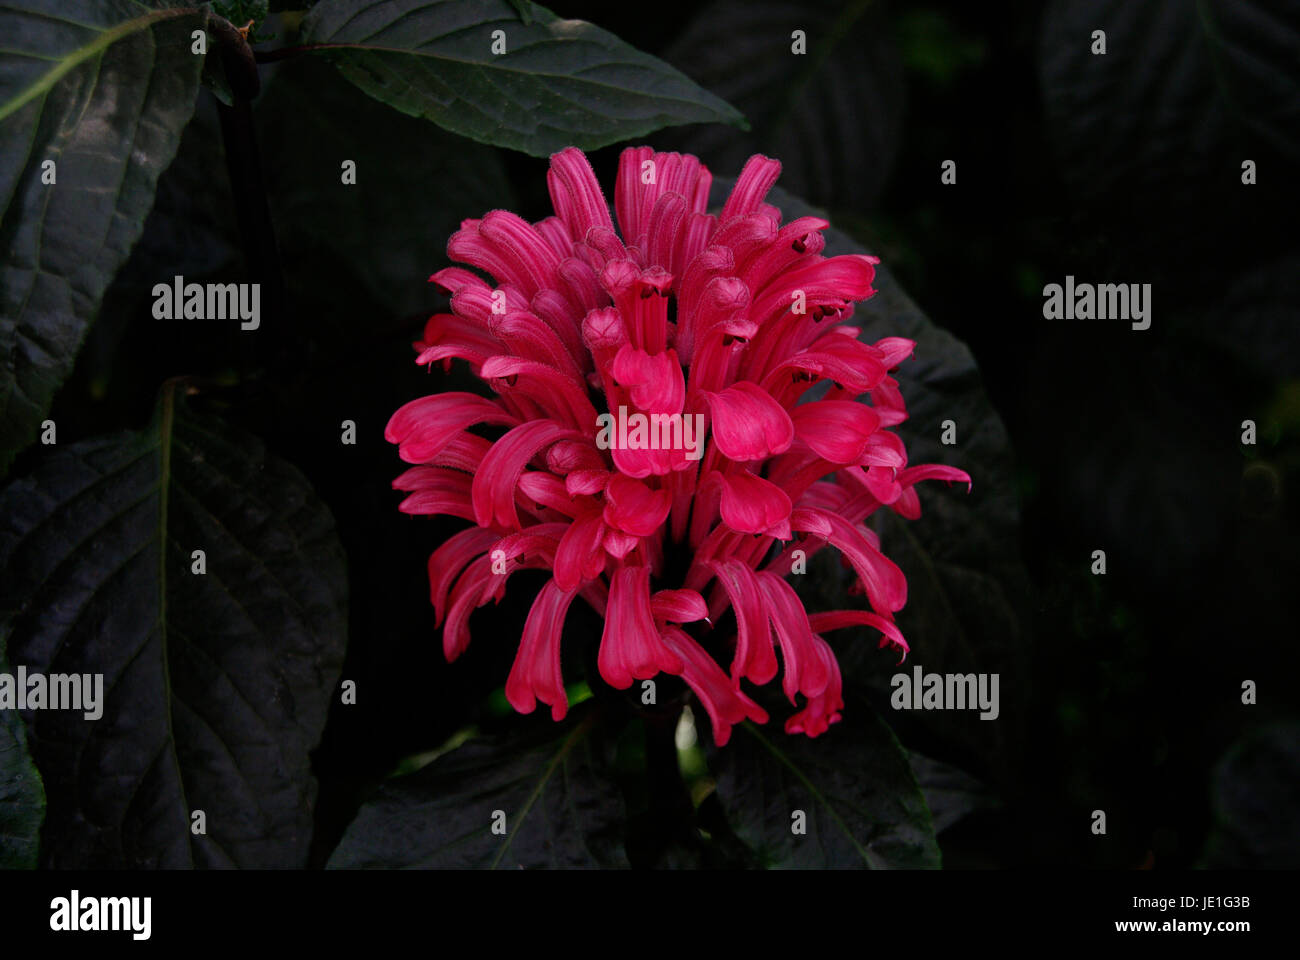 Justicia carnea 'Radiant' or the 'Brazillian Plume Flower'. Stock Photo